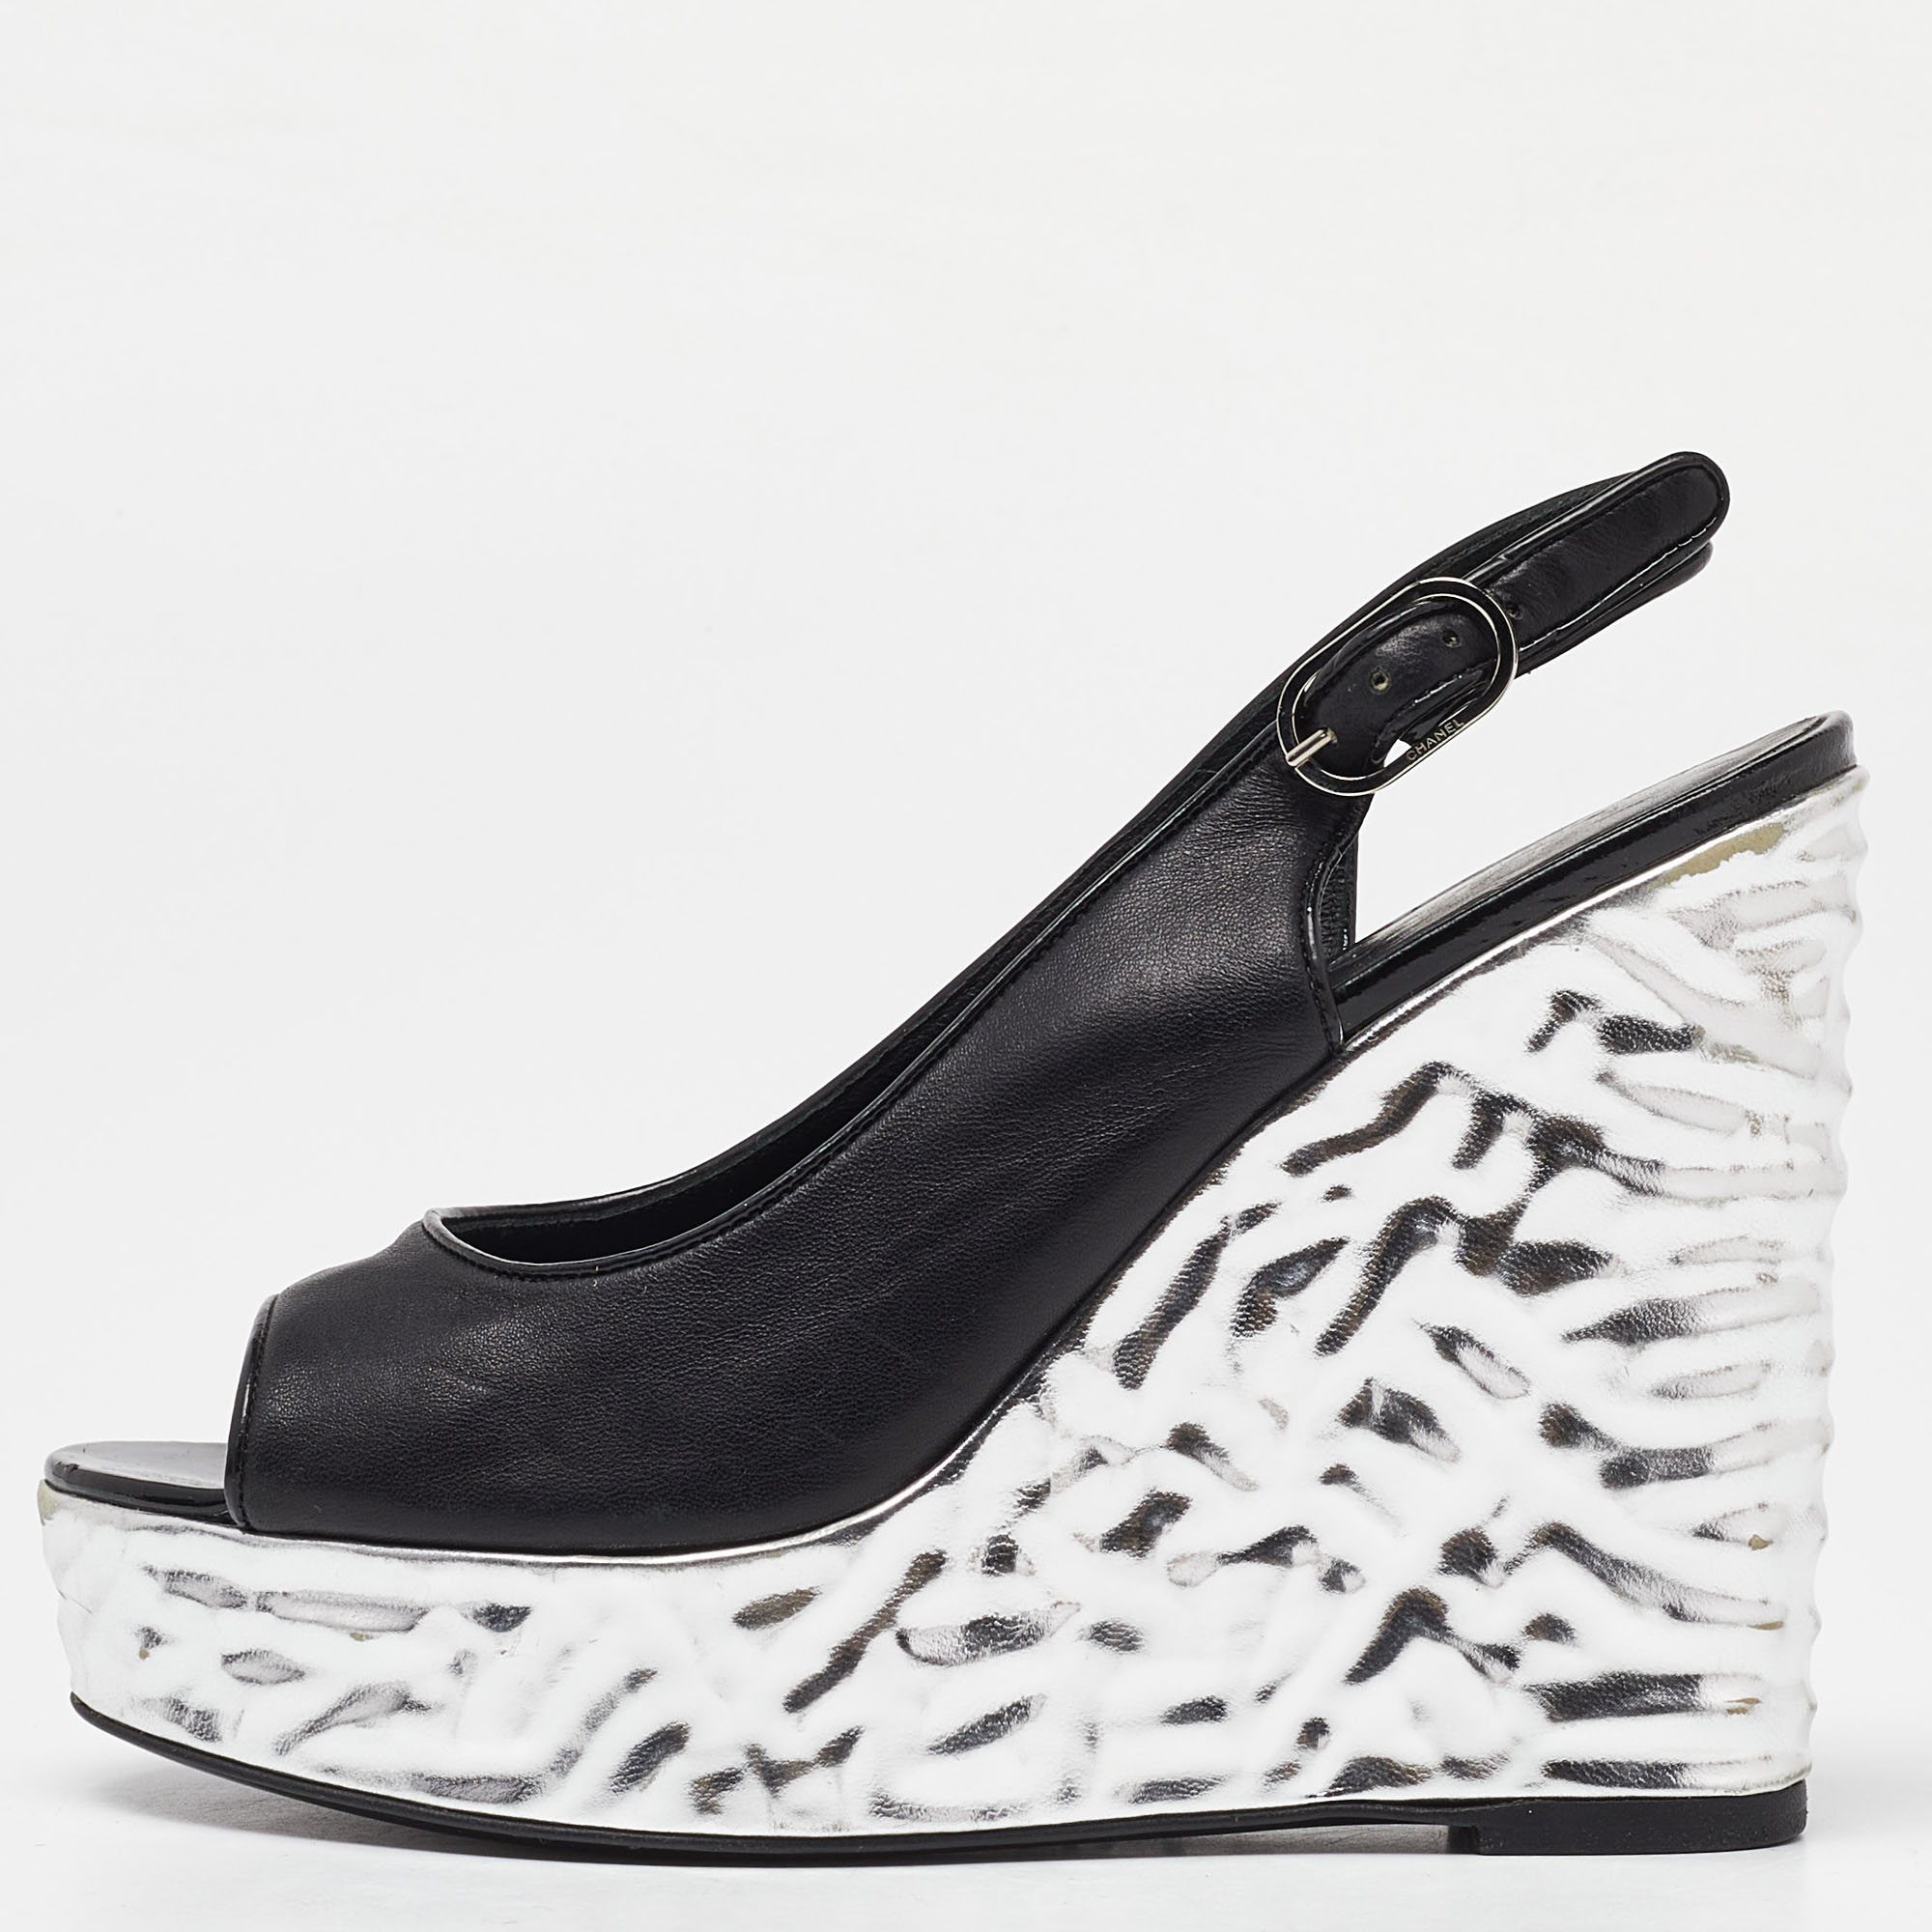 Chanel black/silver leather ankle strap platform wedge sandals size 36